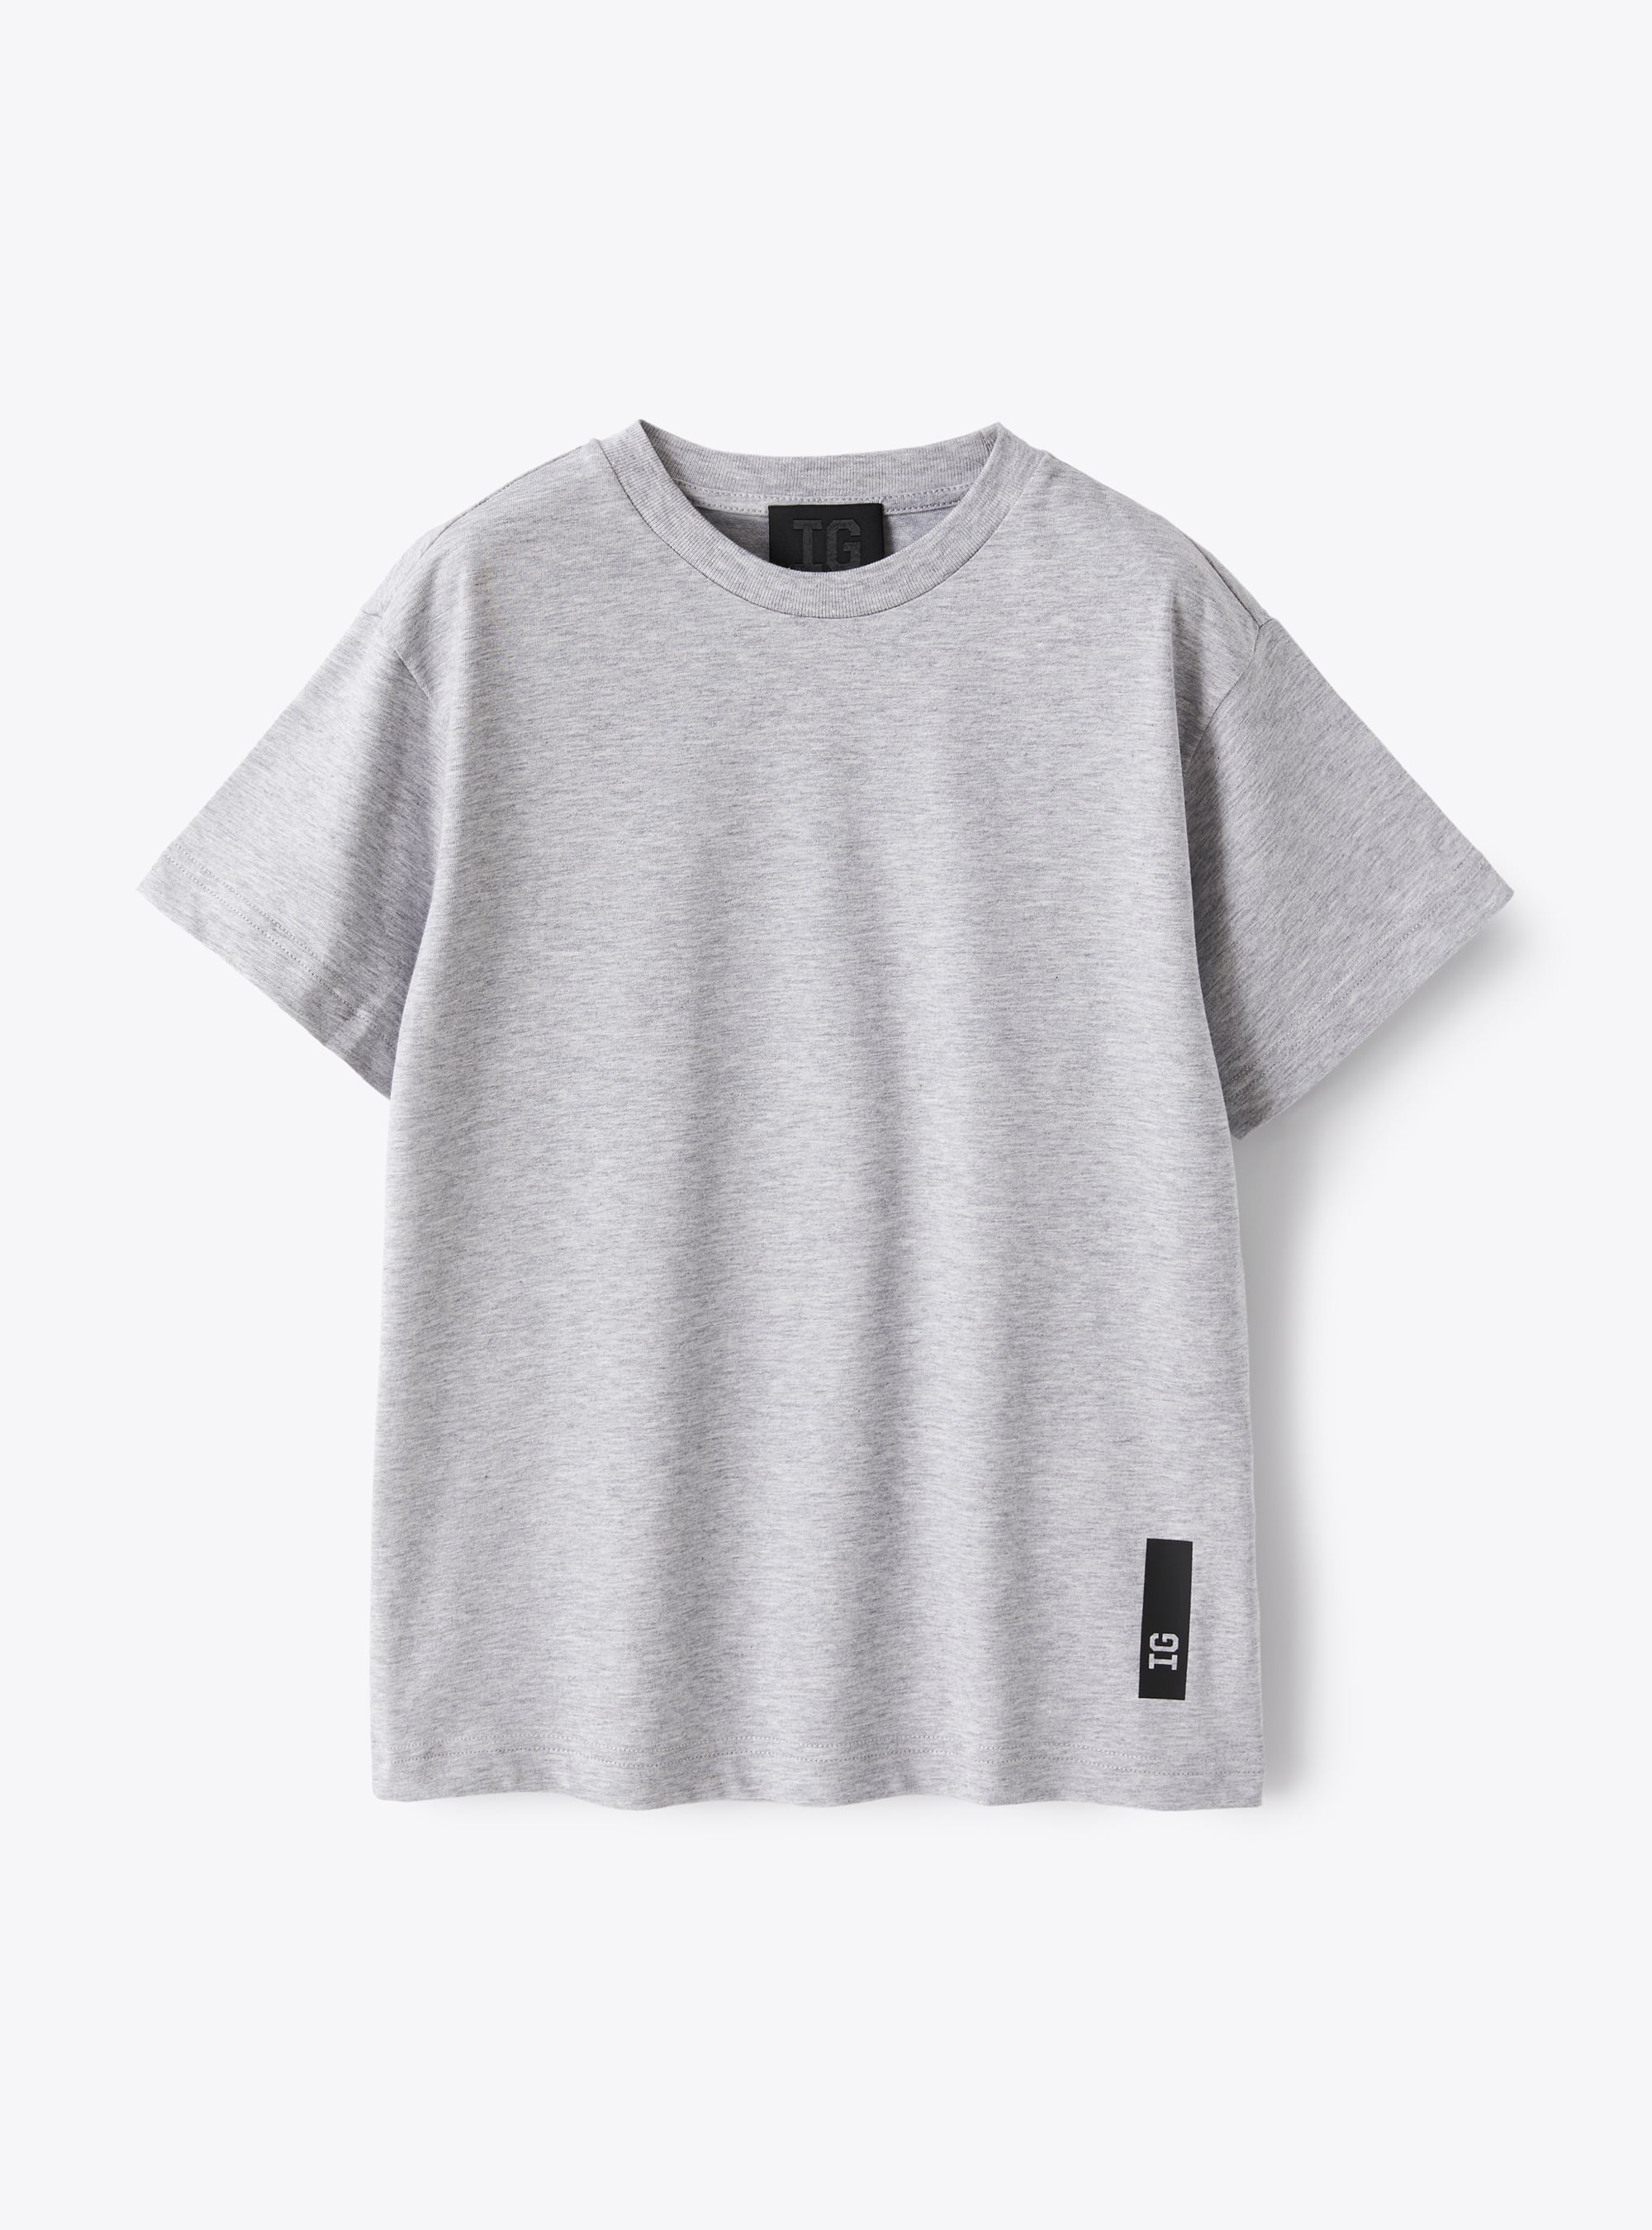 T-shirt in marled-grey cotton jersey - Grey | Il Gufo